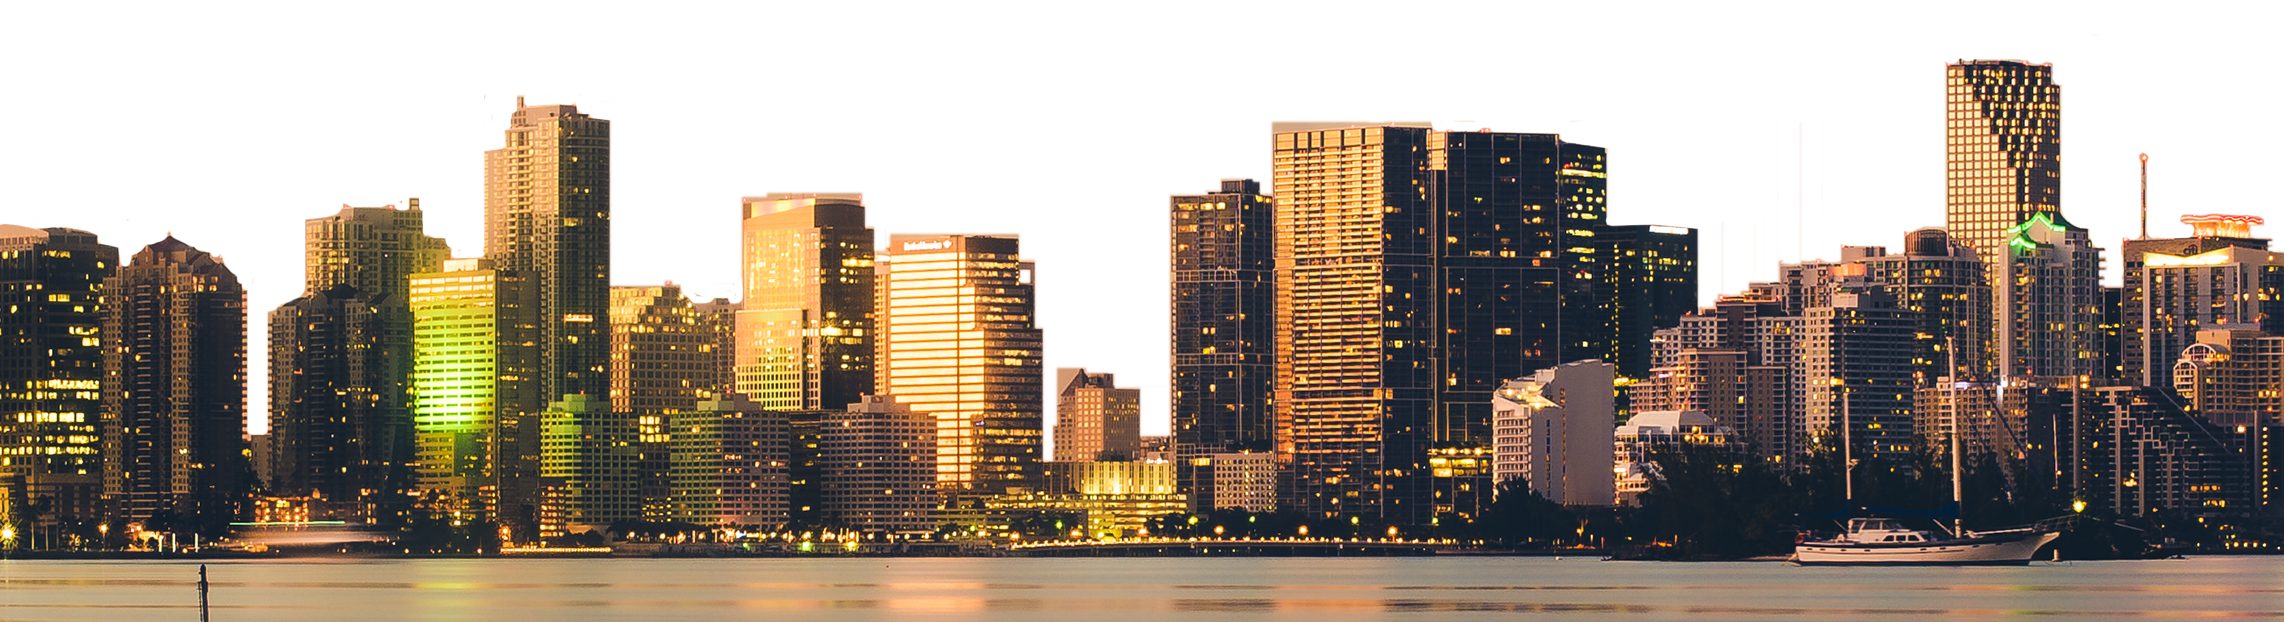 Virtual city skyscrapers buil